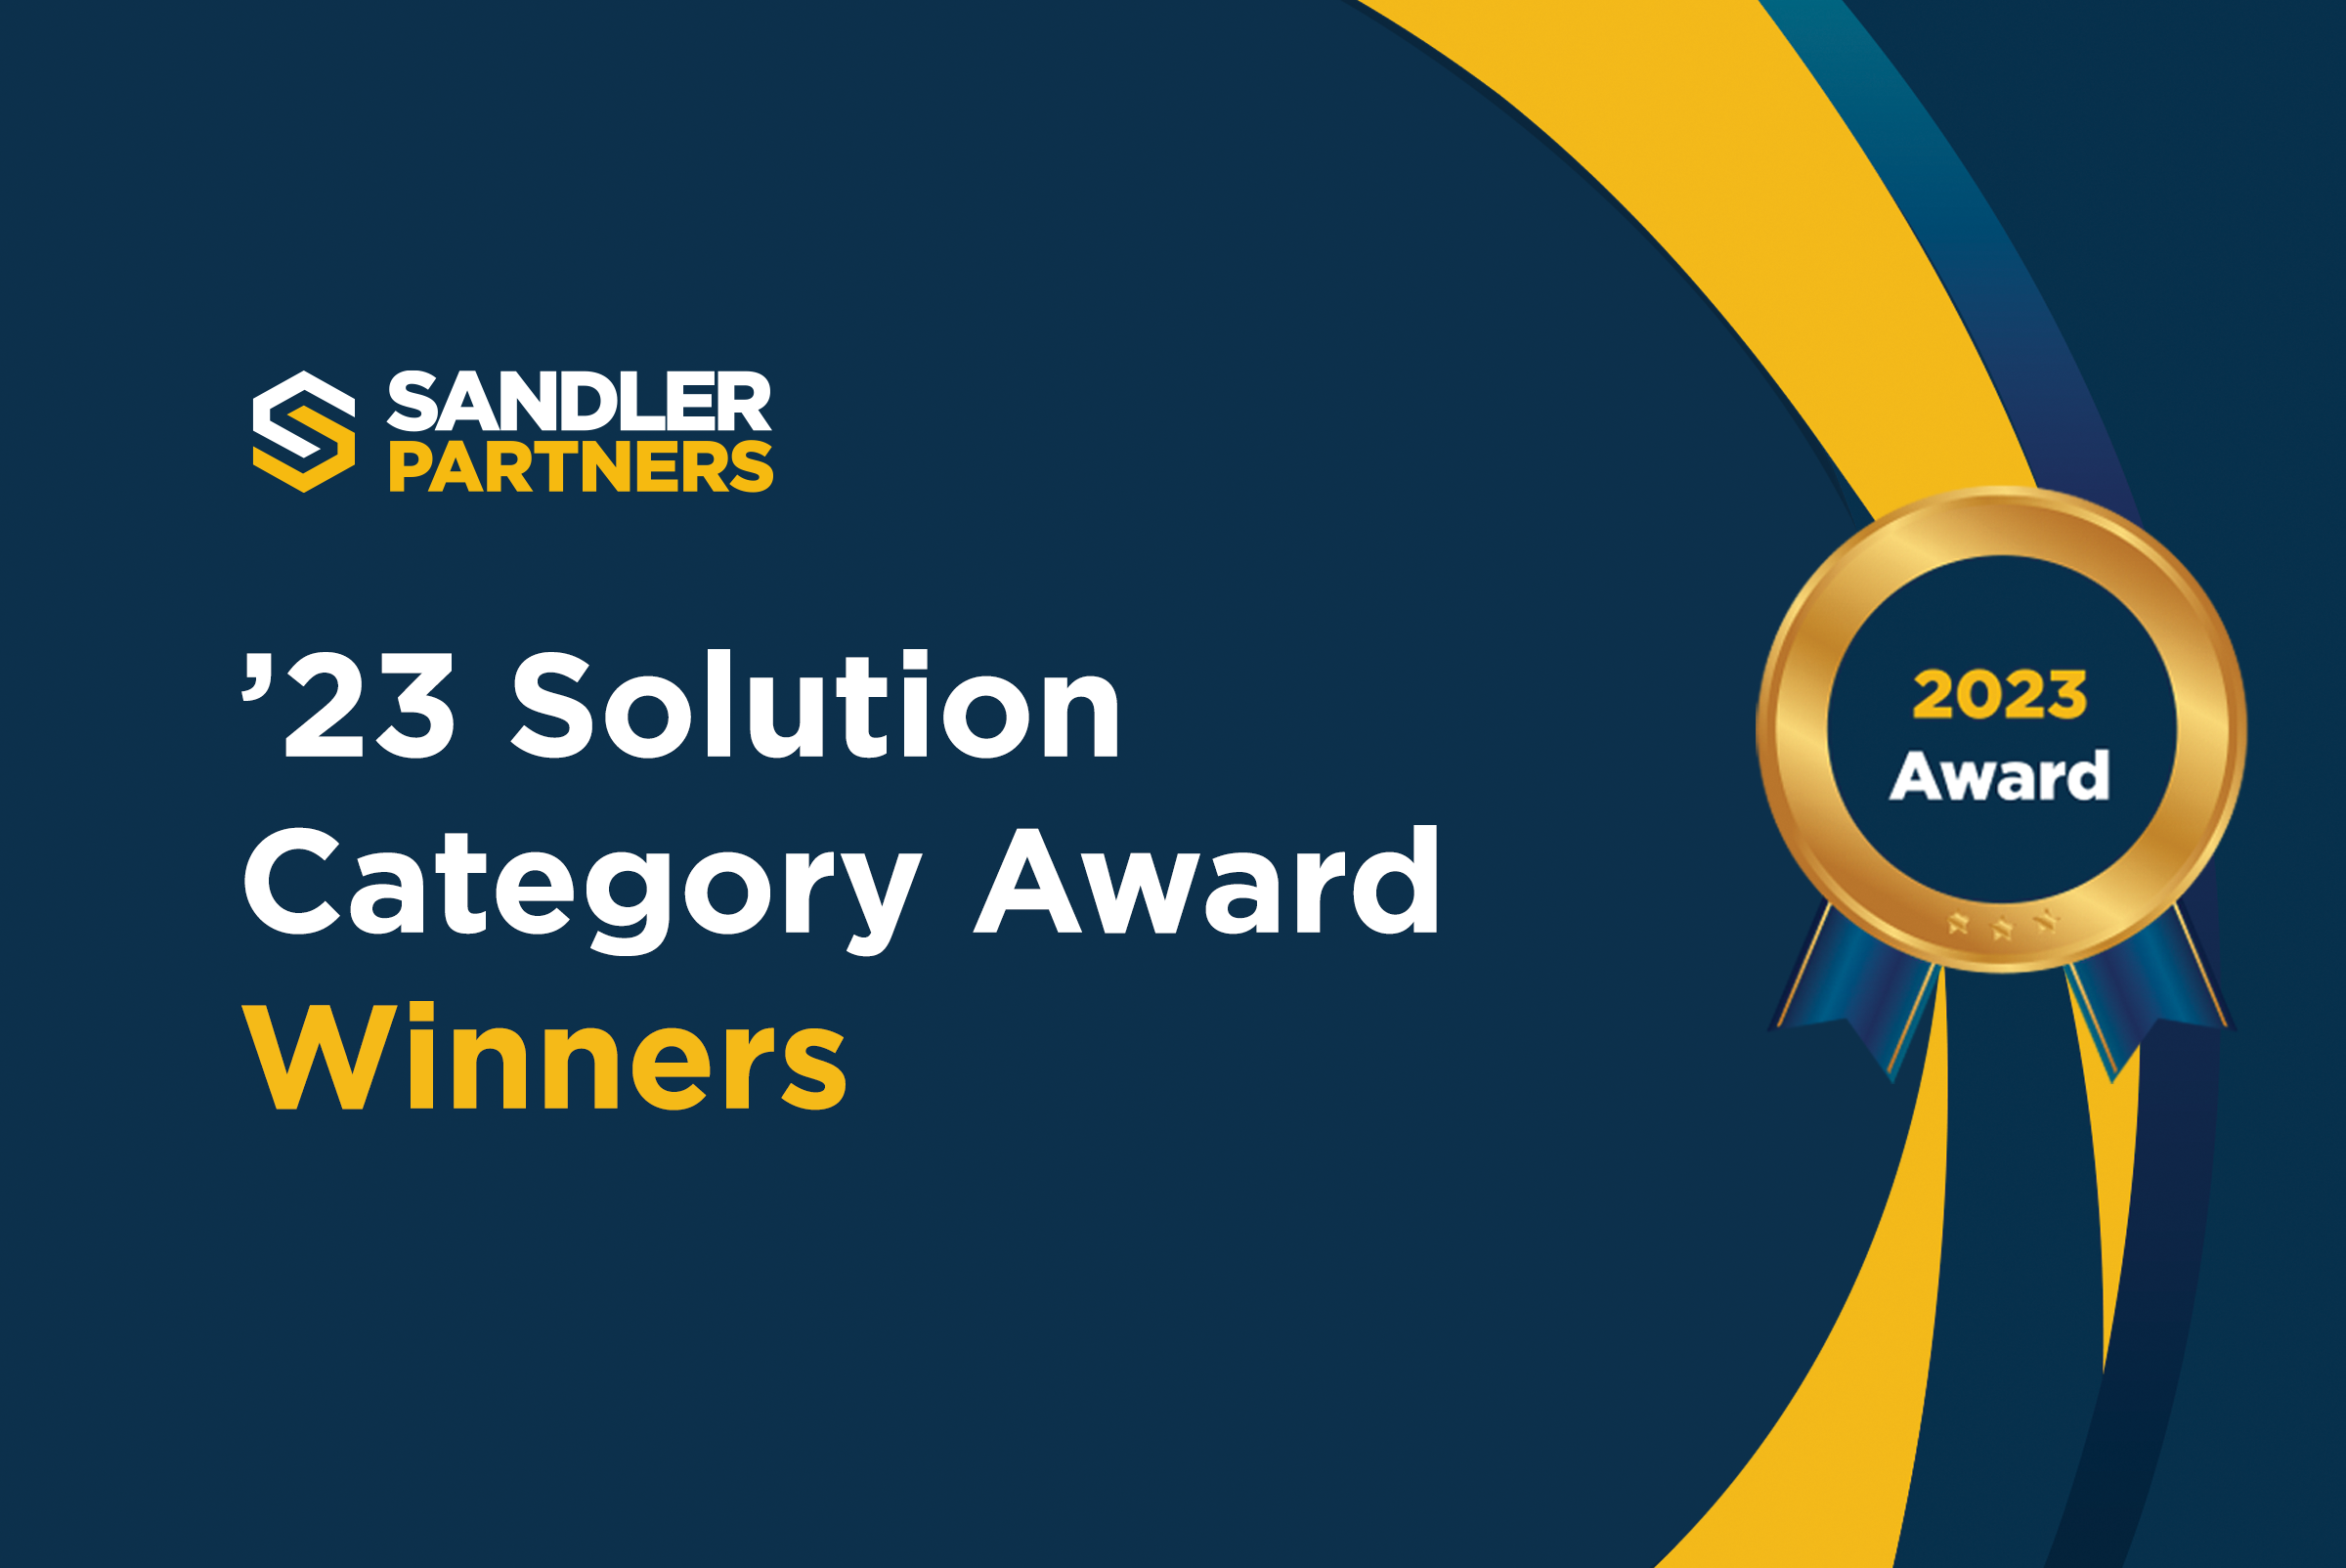 Sandler Partners 2022 Solution Category Award Winners